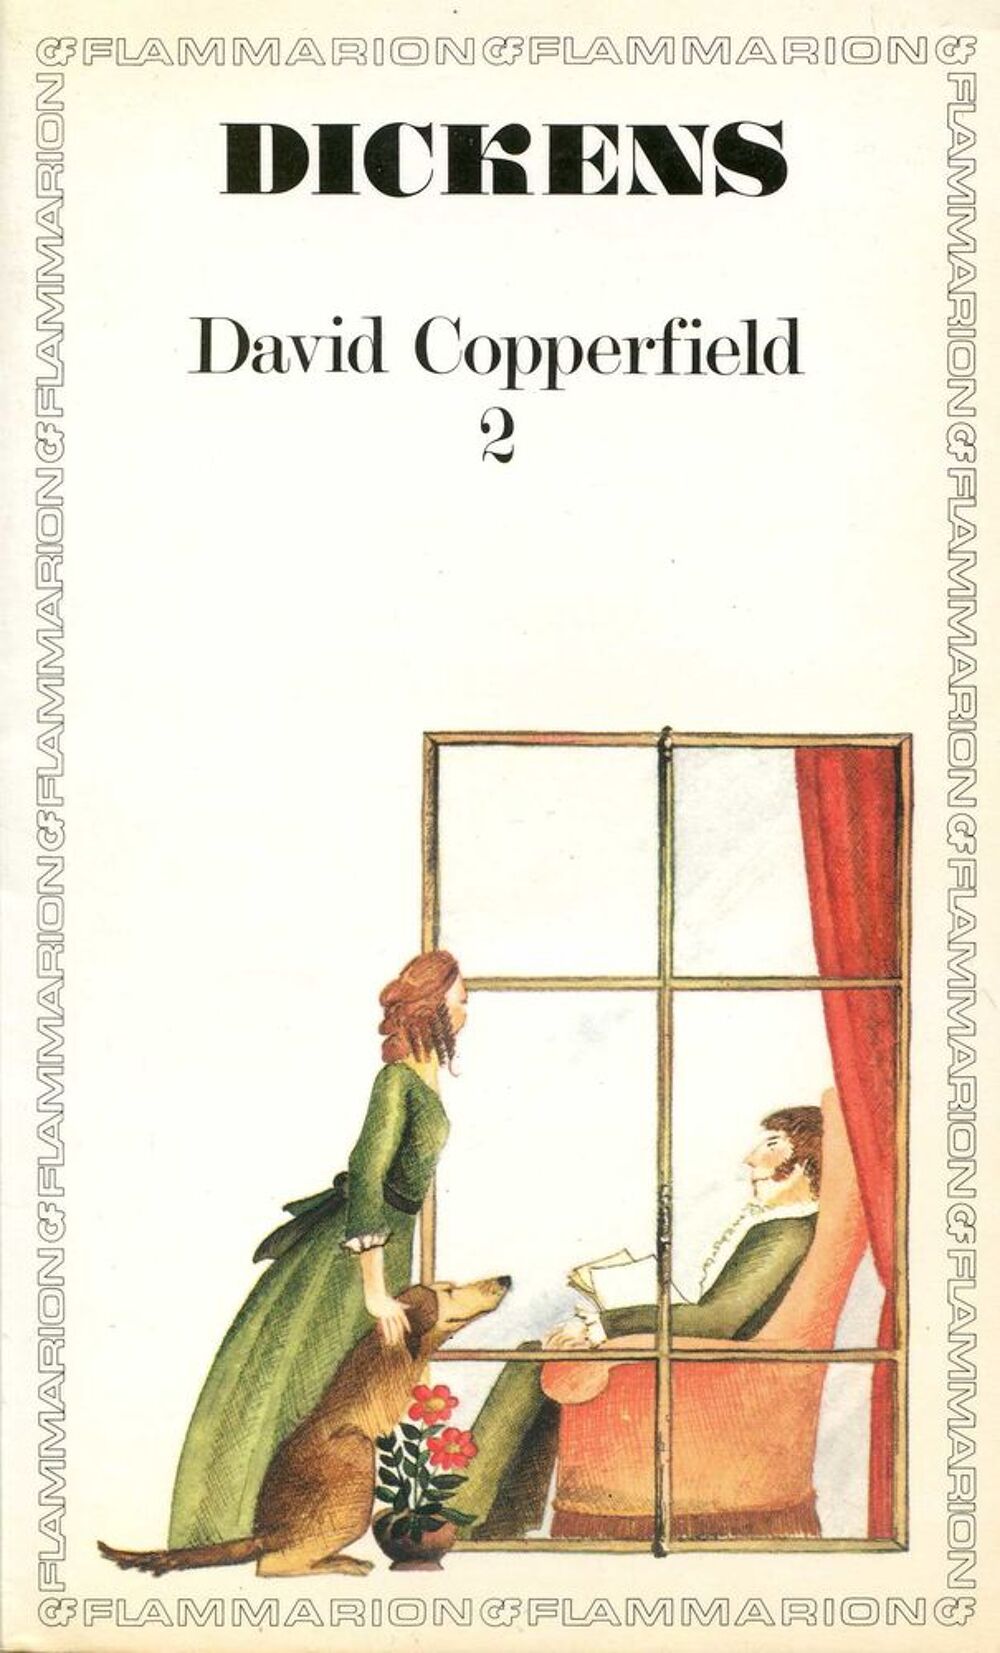 David Copperfield 1 et 2 - Charles Dickens Livres et BD